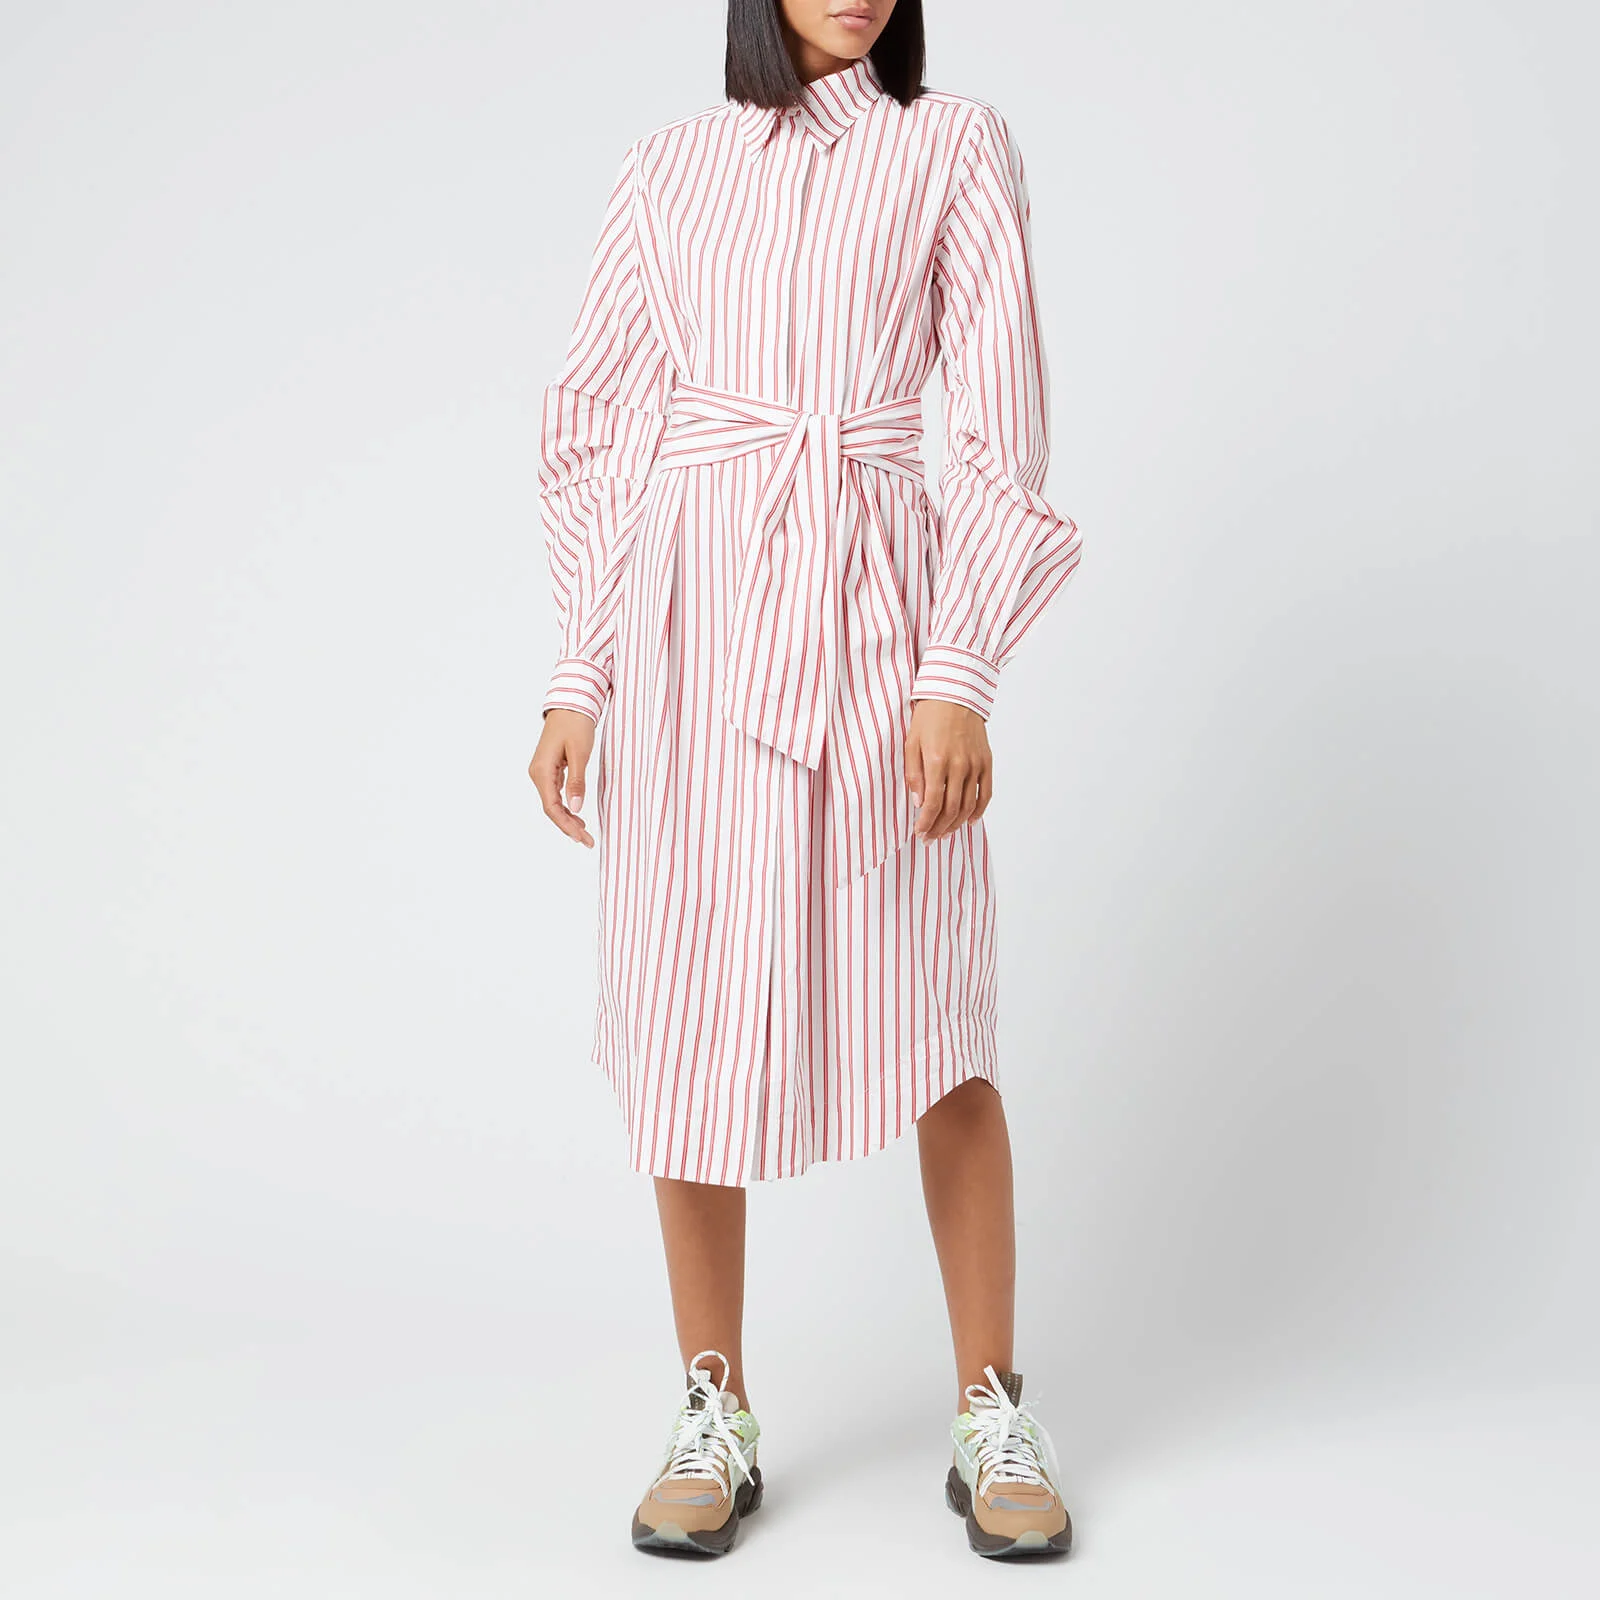 Ganni Women's Stripe Cotton Shirt Dress - Lollipop Image 1